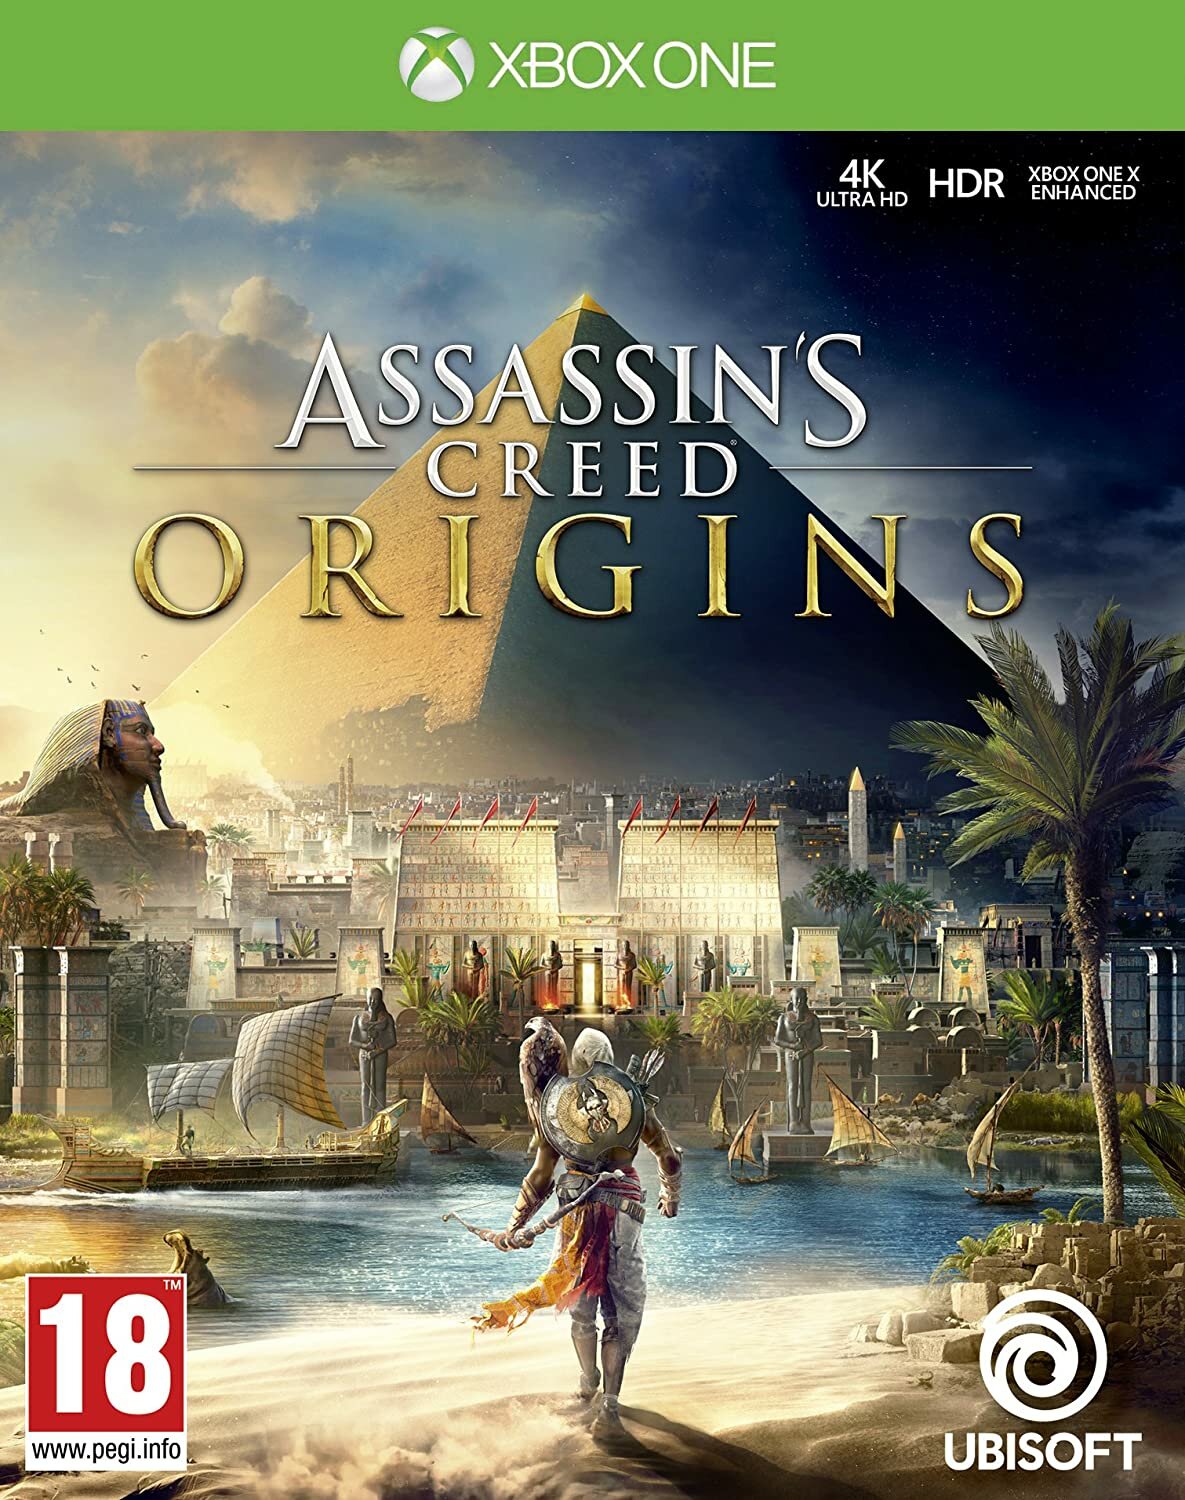 Игра Assassin’s Creed Origins, цифровой ключ для Xbox One/Series X|S, русская озвучка, Аргентина